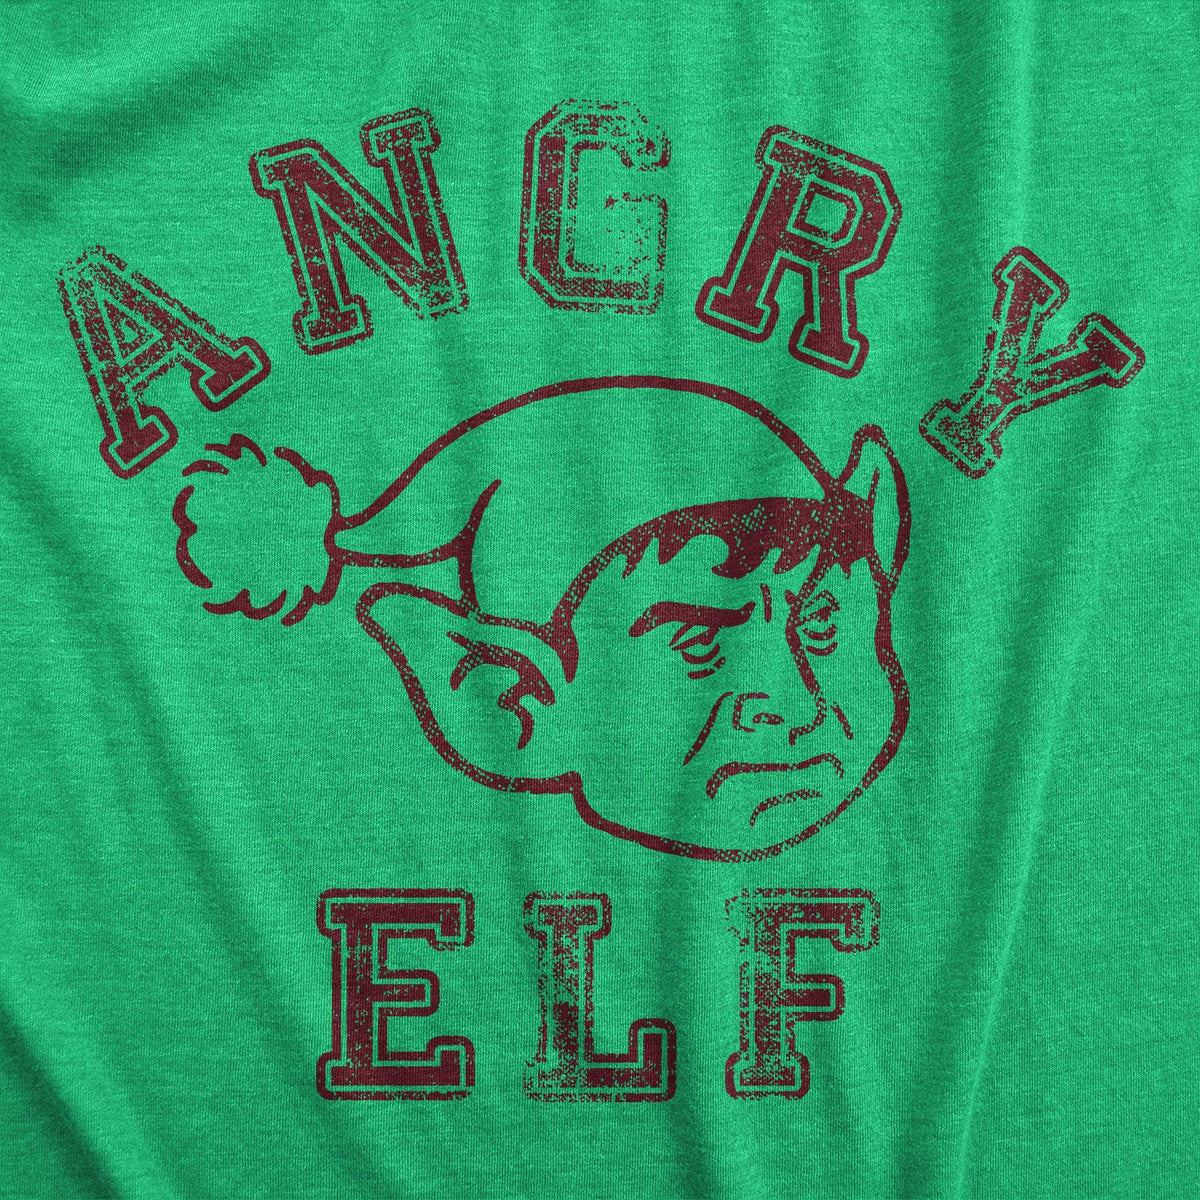 Angry Elf Women&#39;s Tshirt  -  Crazy Dog T-Shirts